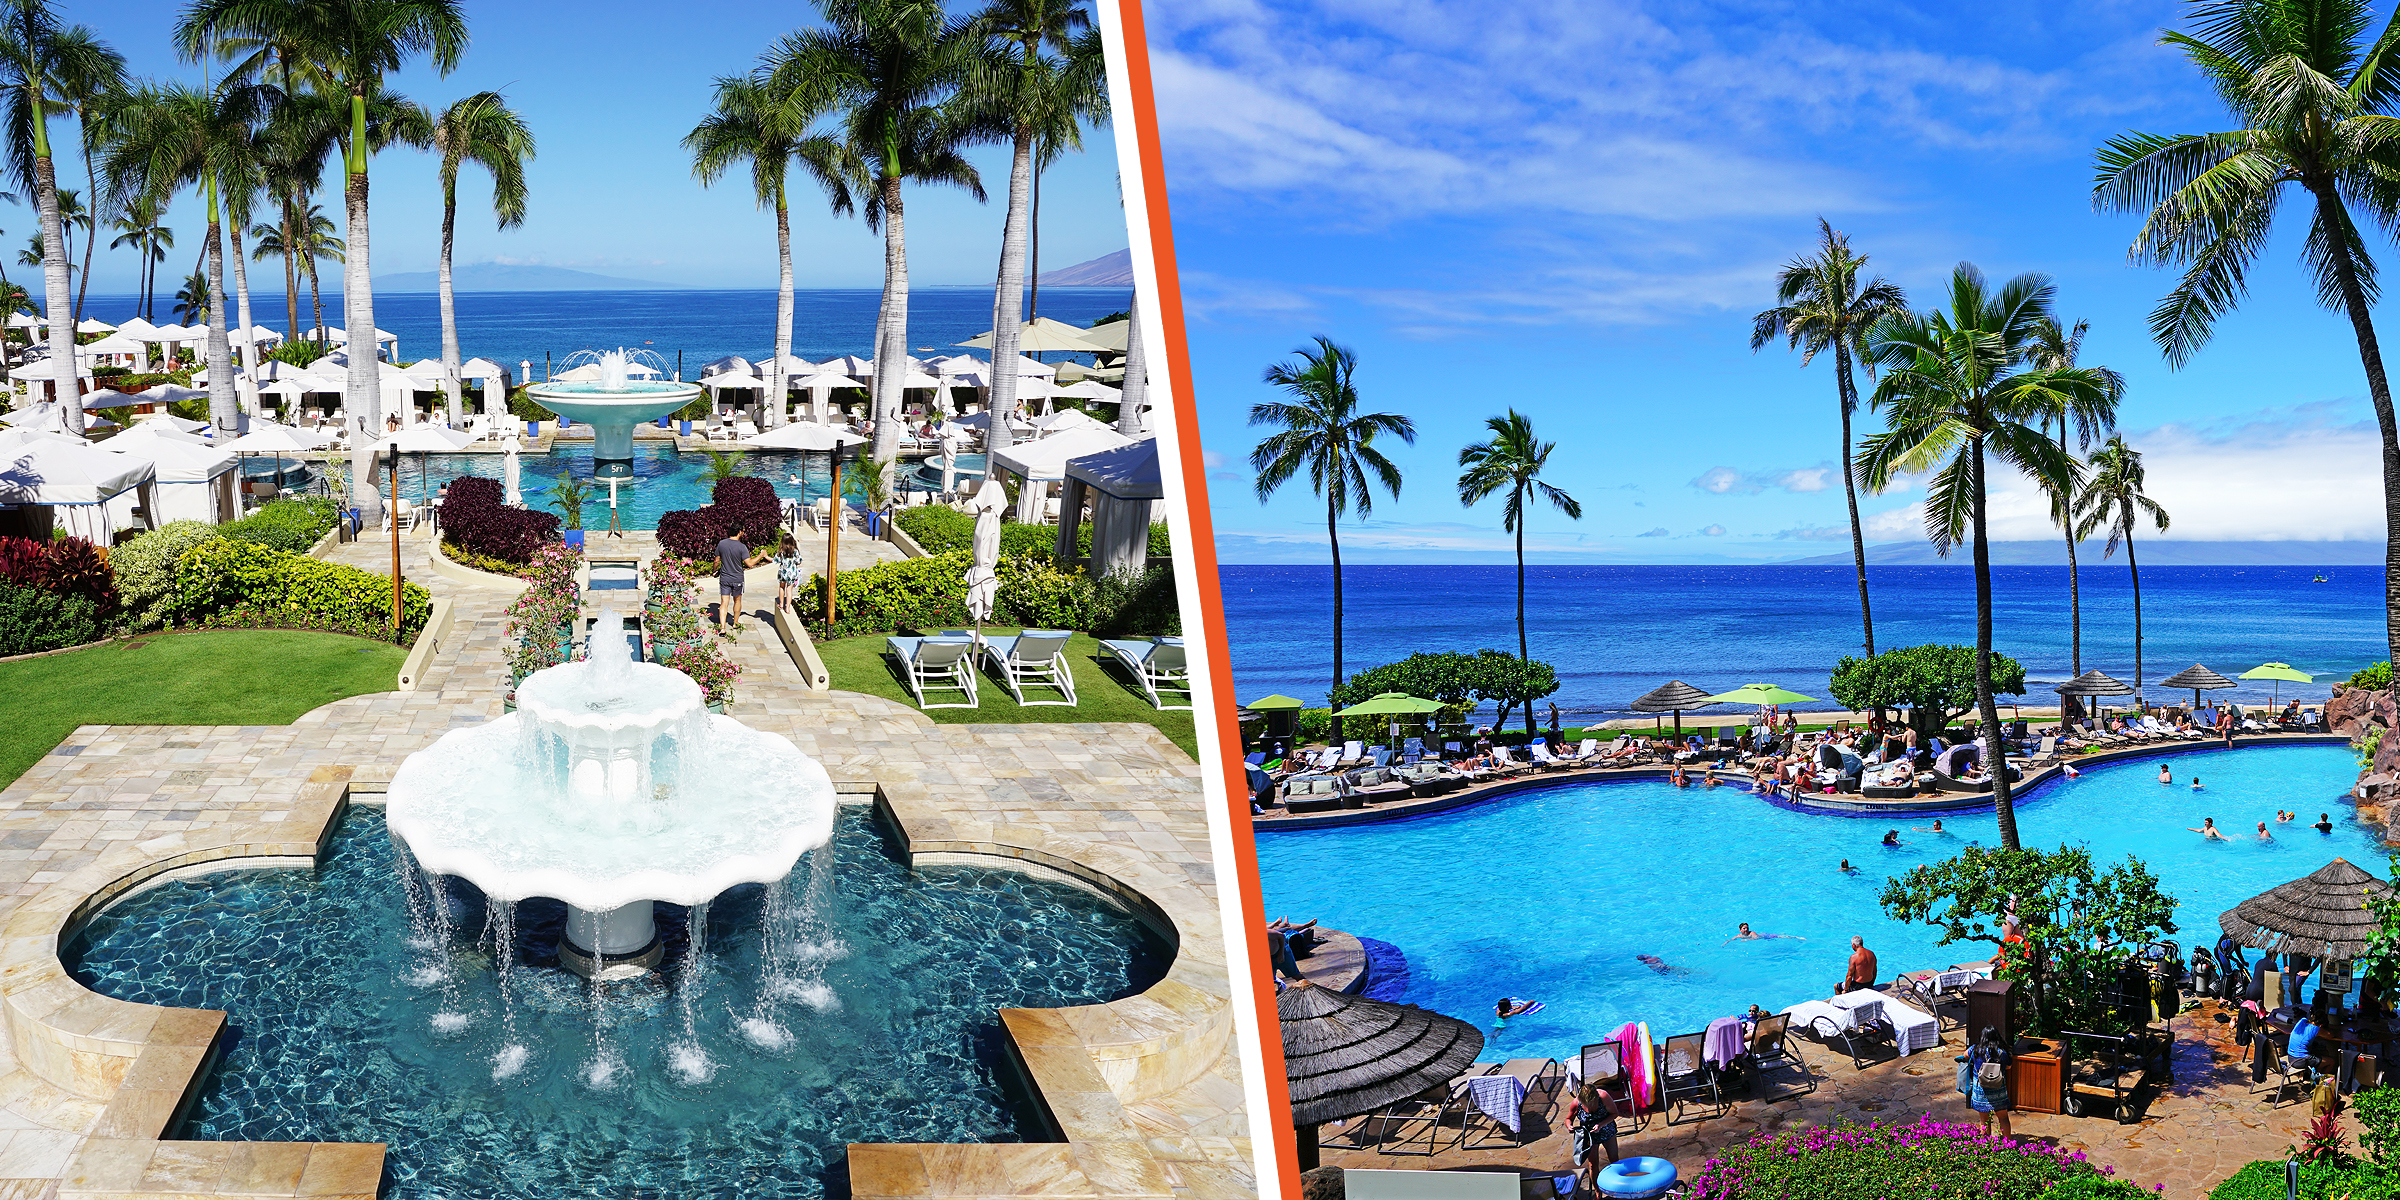 Four Seasons Resort | The Hyatt Regency Maui Resort | Source: Shutterstock